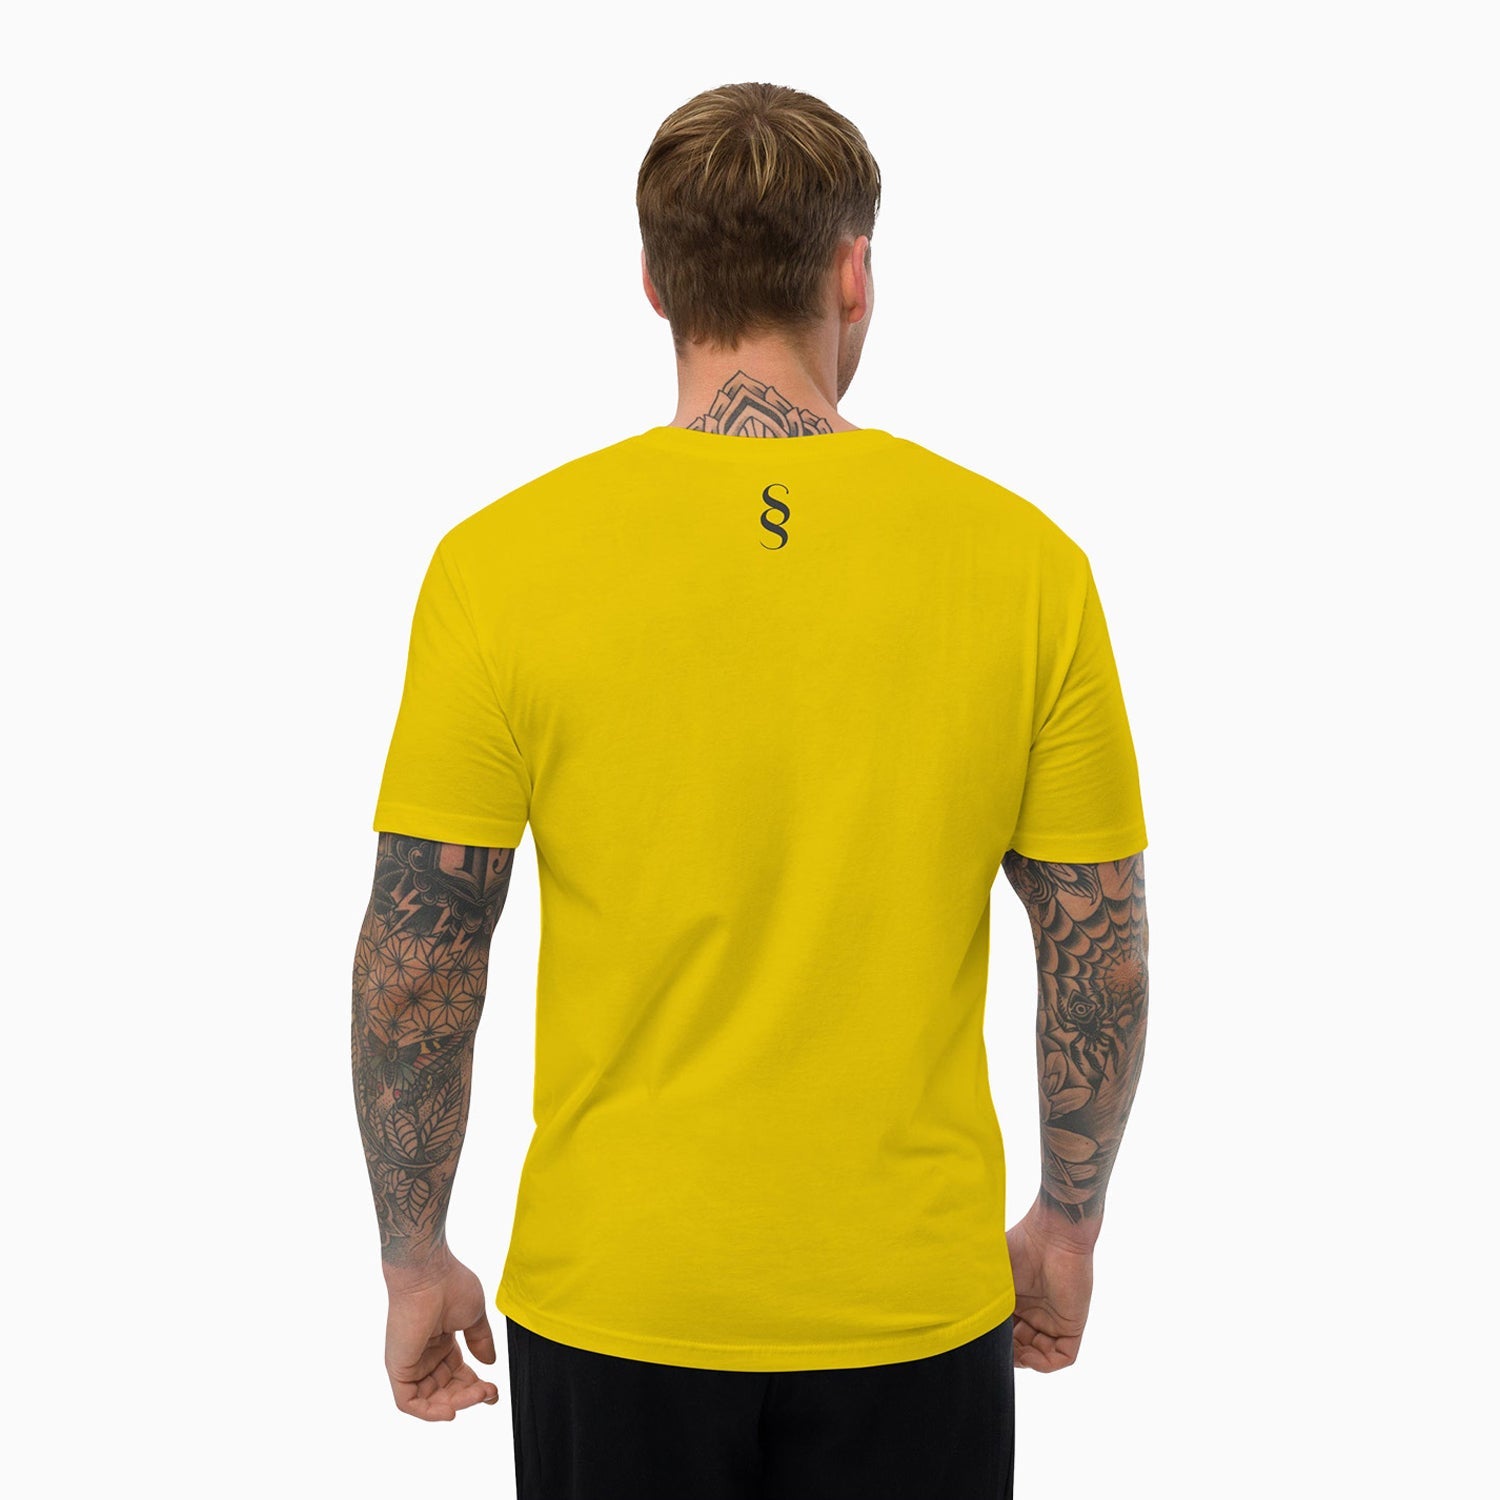 money-heist-design-printed-crew-neck-yellow-t-shirt-for-men-st108-728